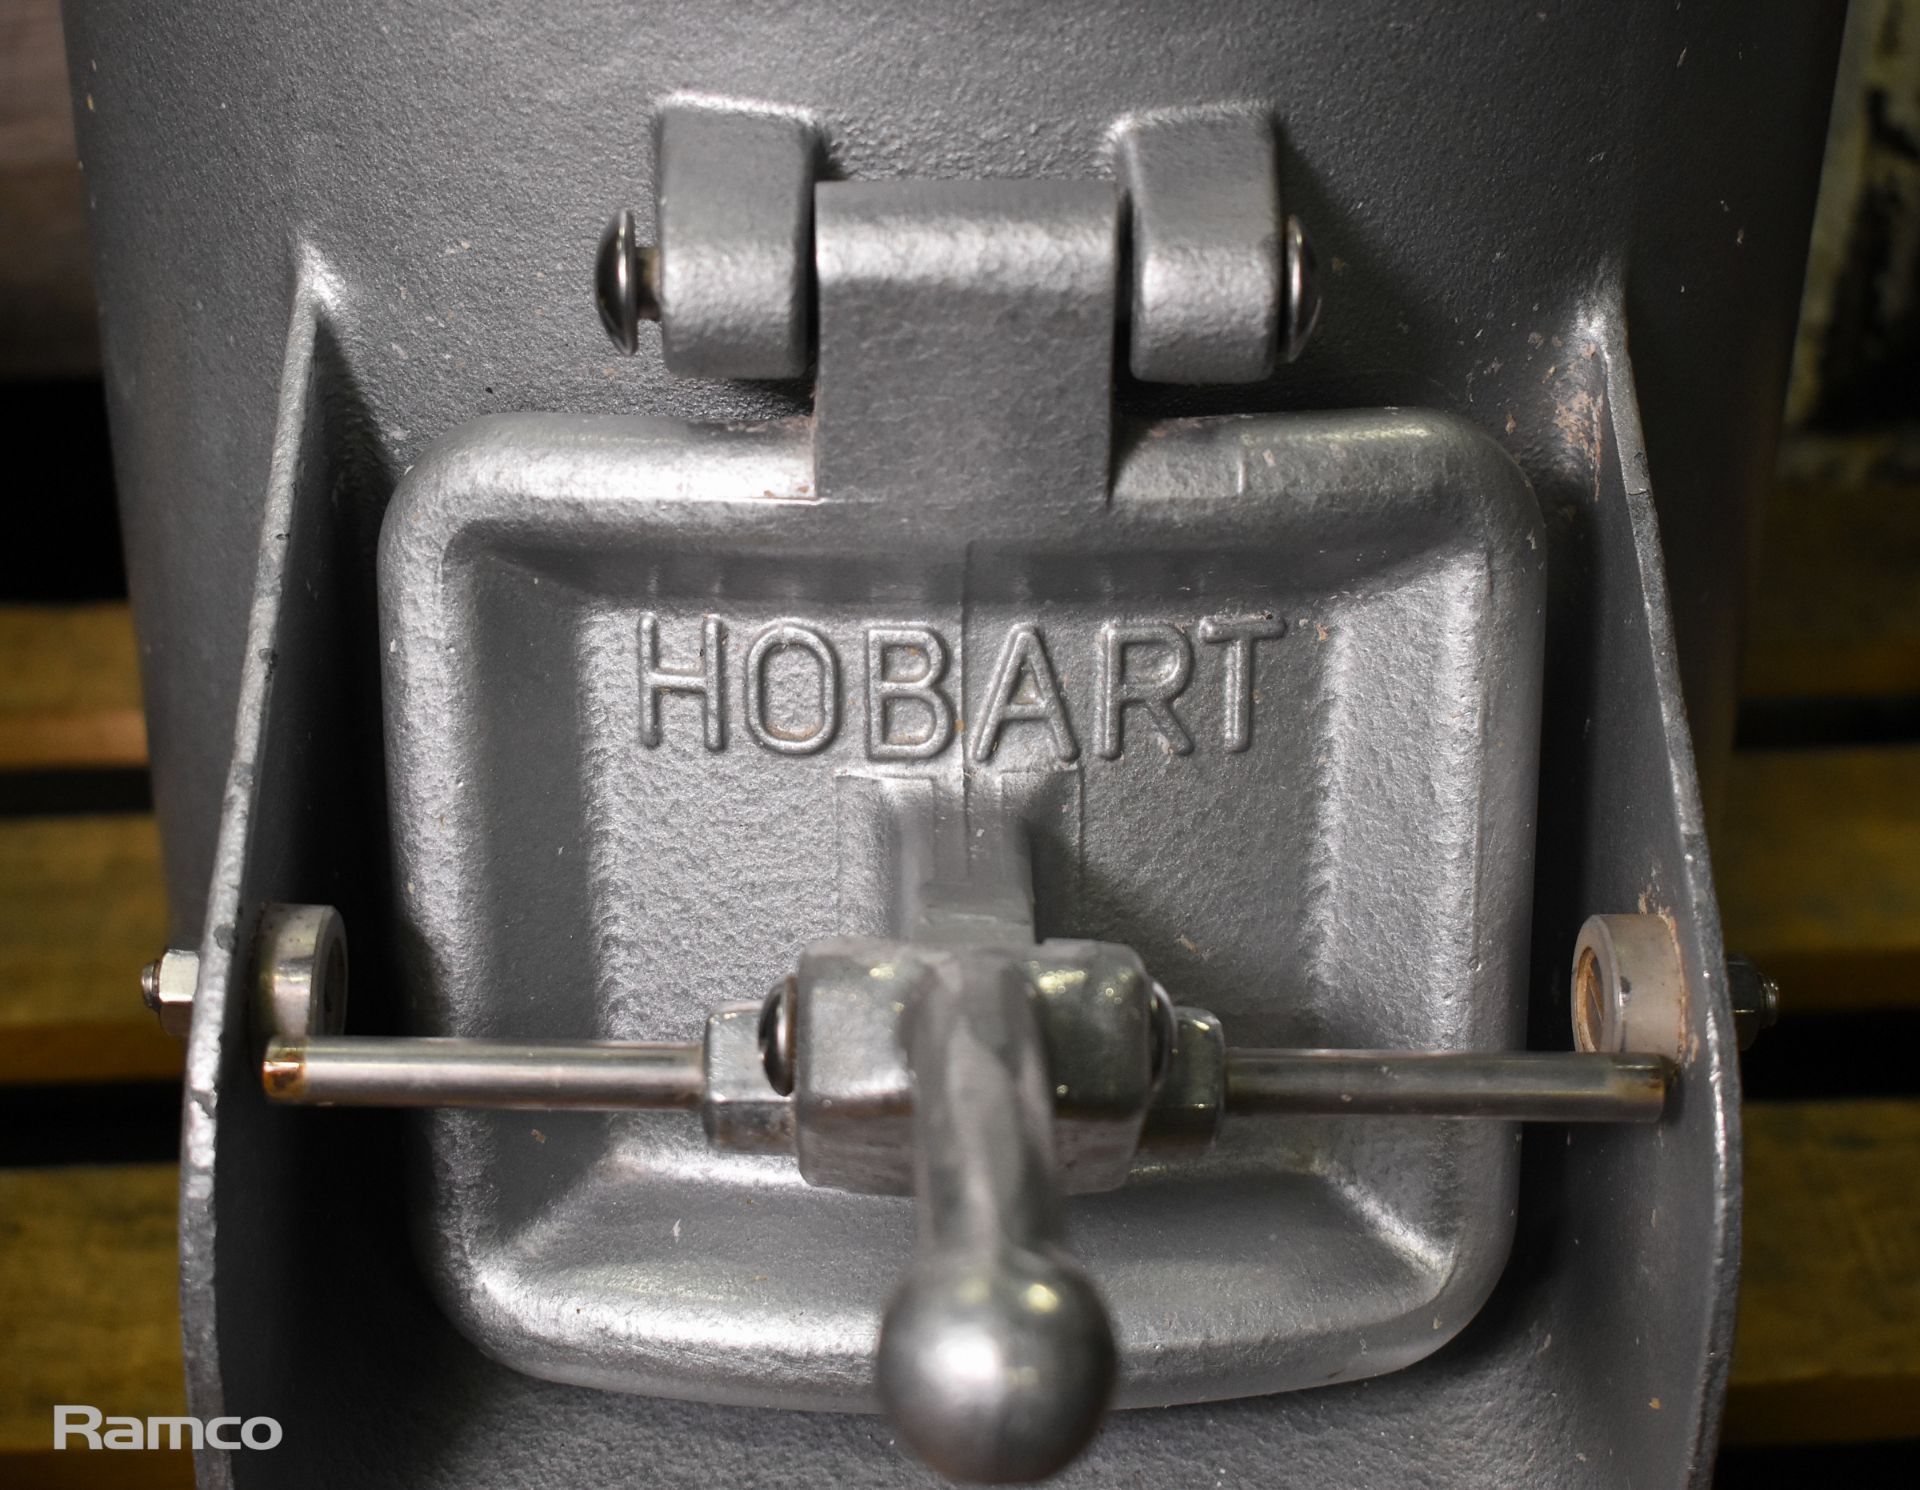 Hobart E6414 potato peeler - W 330 x D 670 x H 530mm - Image 7 of 7